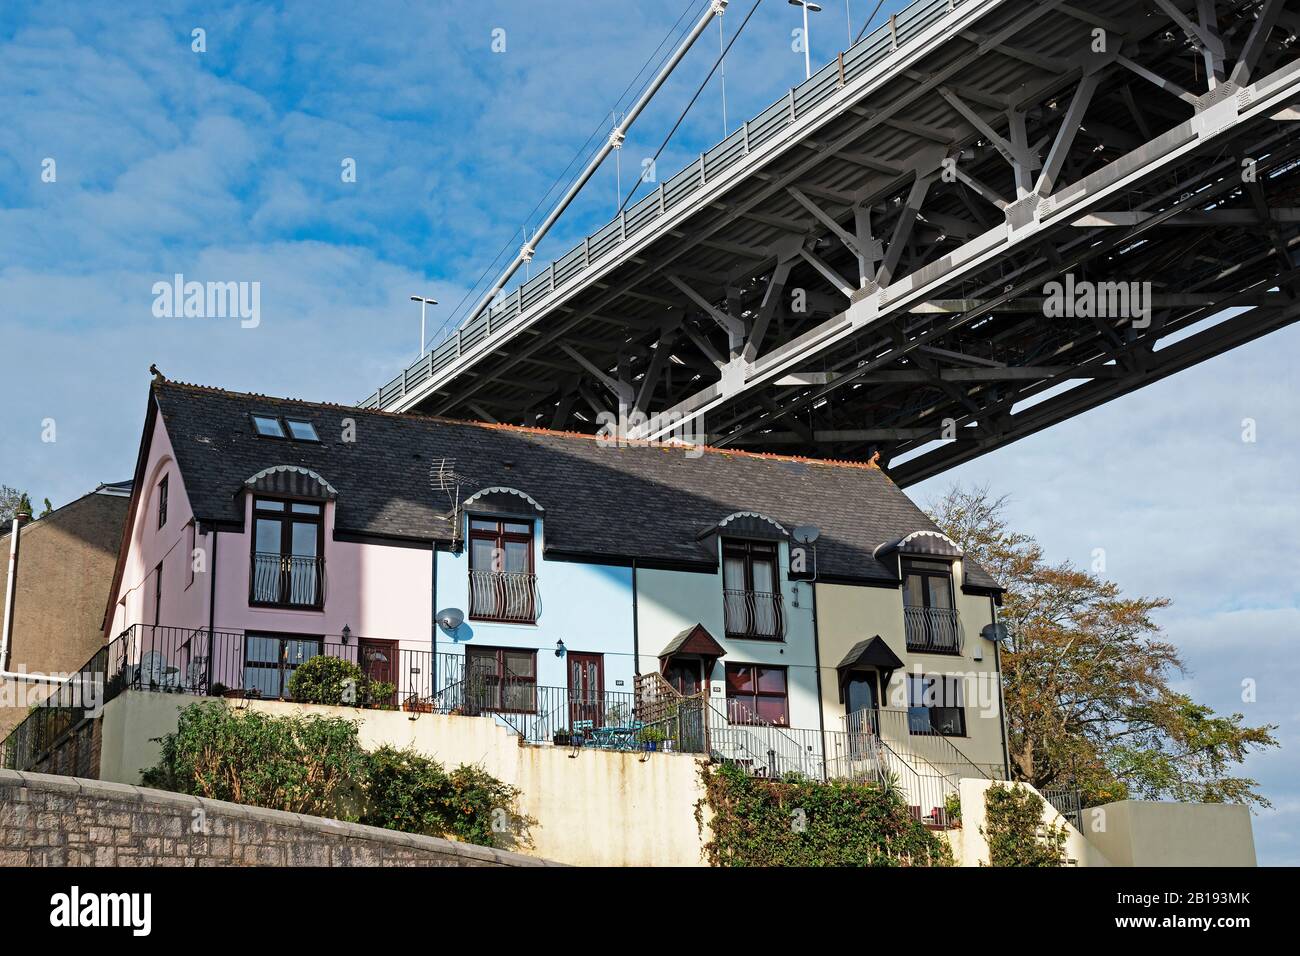 homes built under the royal albert bridge in saltash, cornwall, england Stock Photo